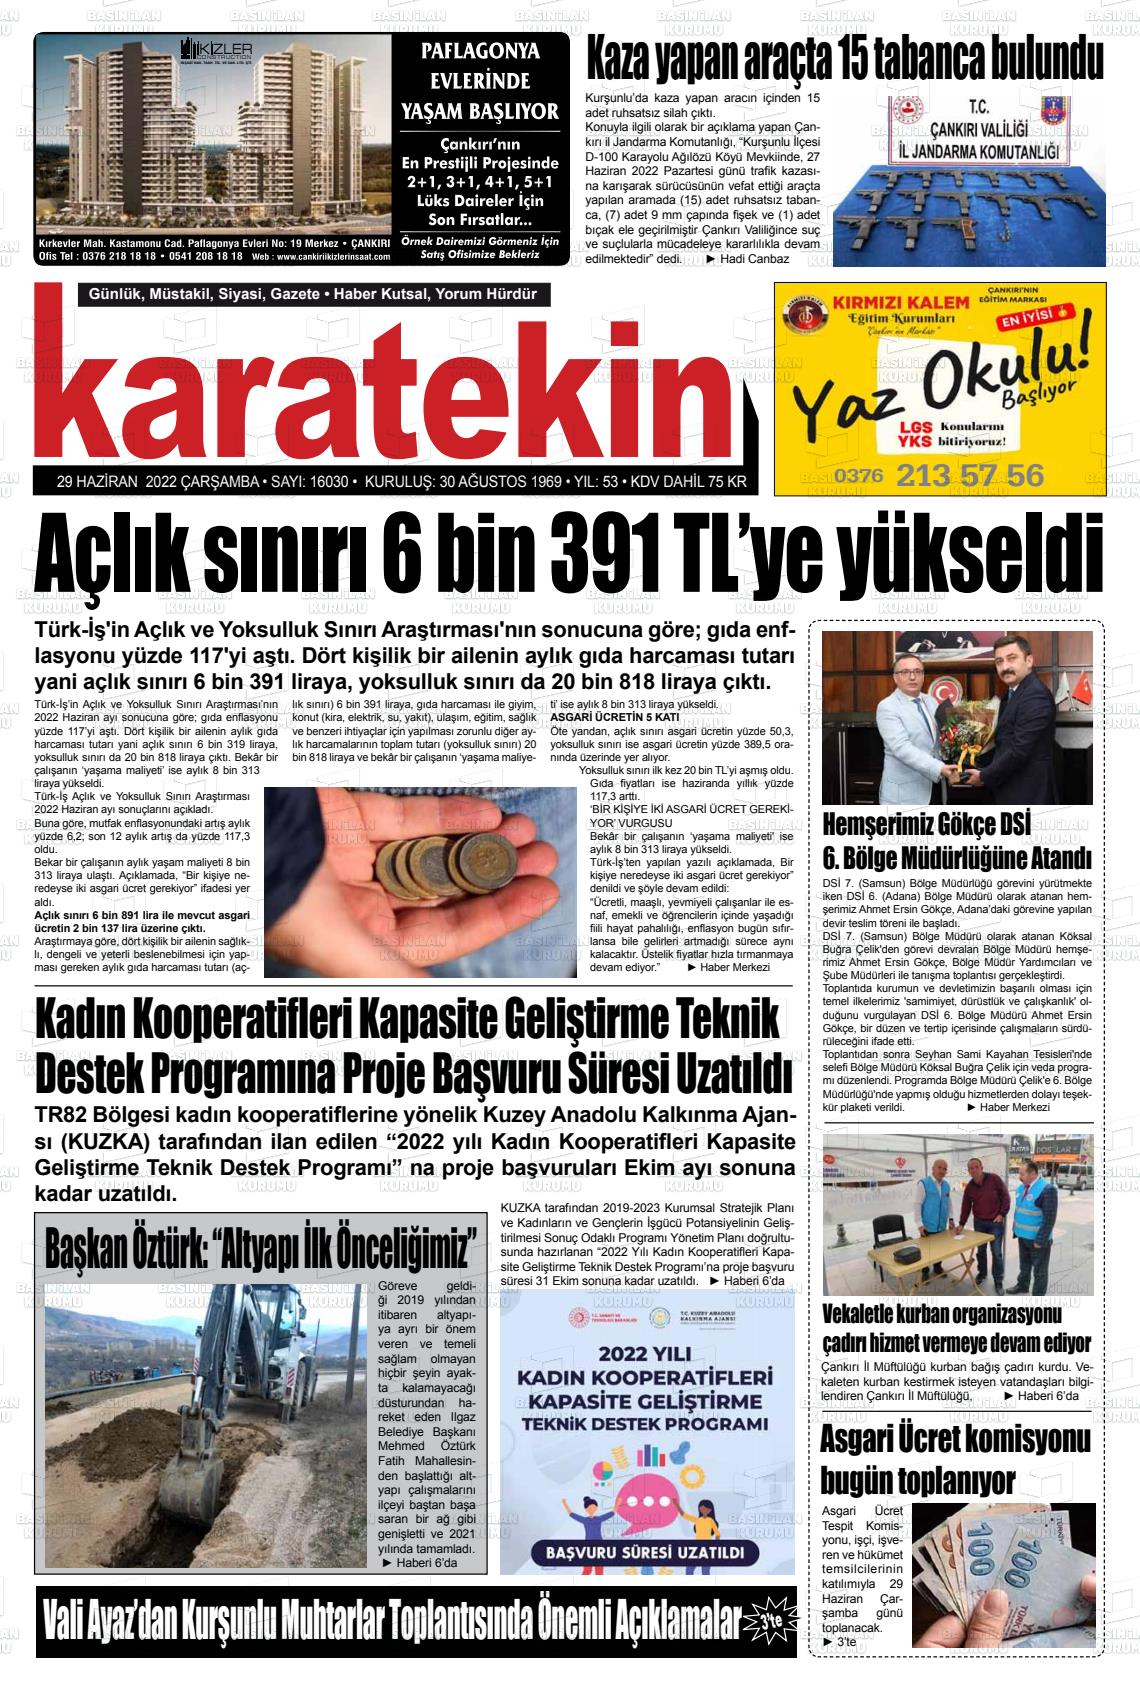 29 Haziran 2022 Karatekin Gazete Manşeti